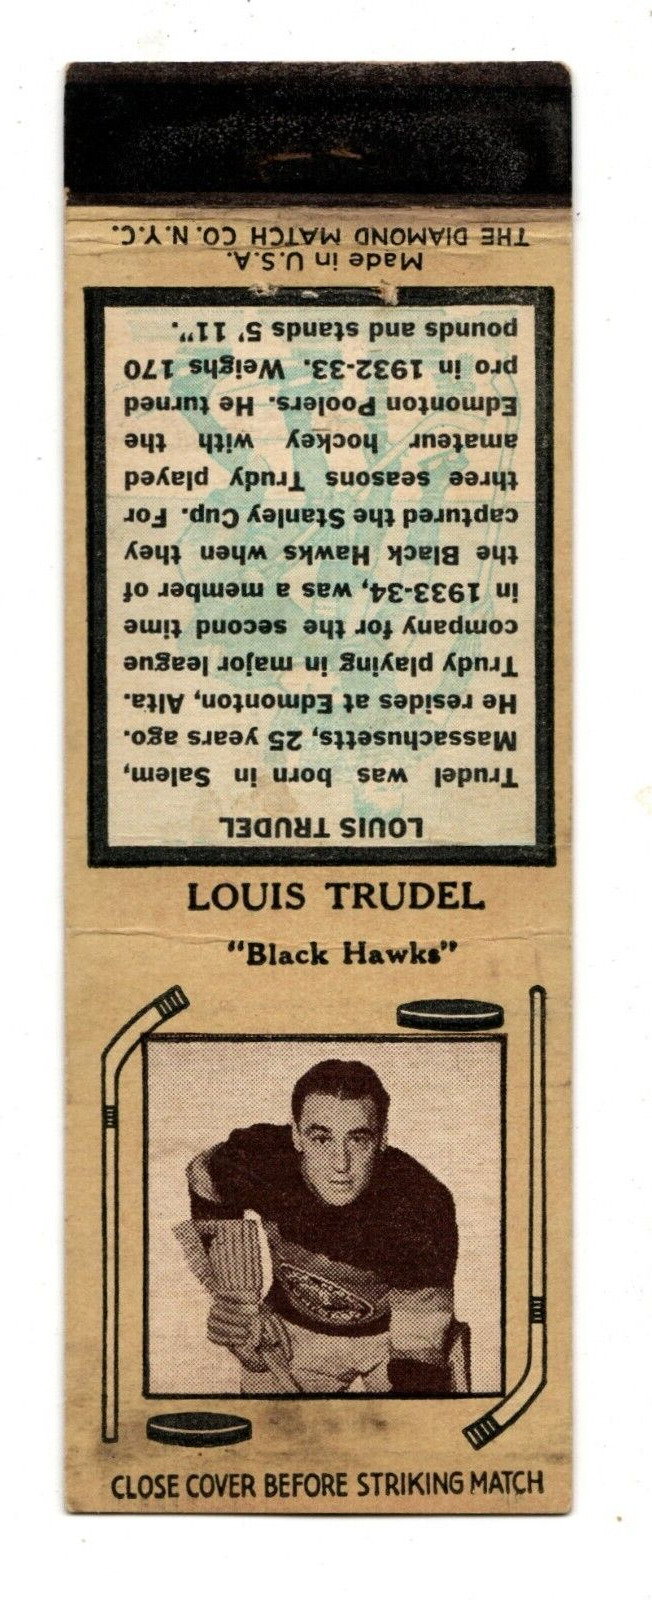 LOUIS TRUDEL matchbook matchcover - 1935-36 DIAMOND HOCKEY CHICAGO BLACK HAWKS